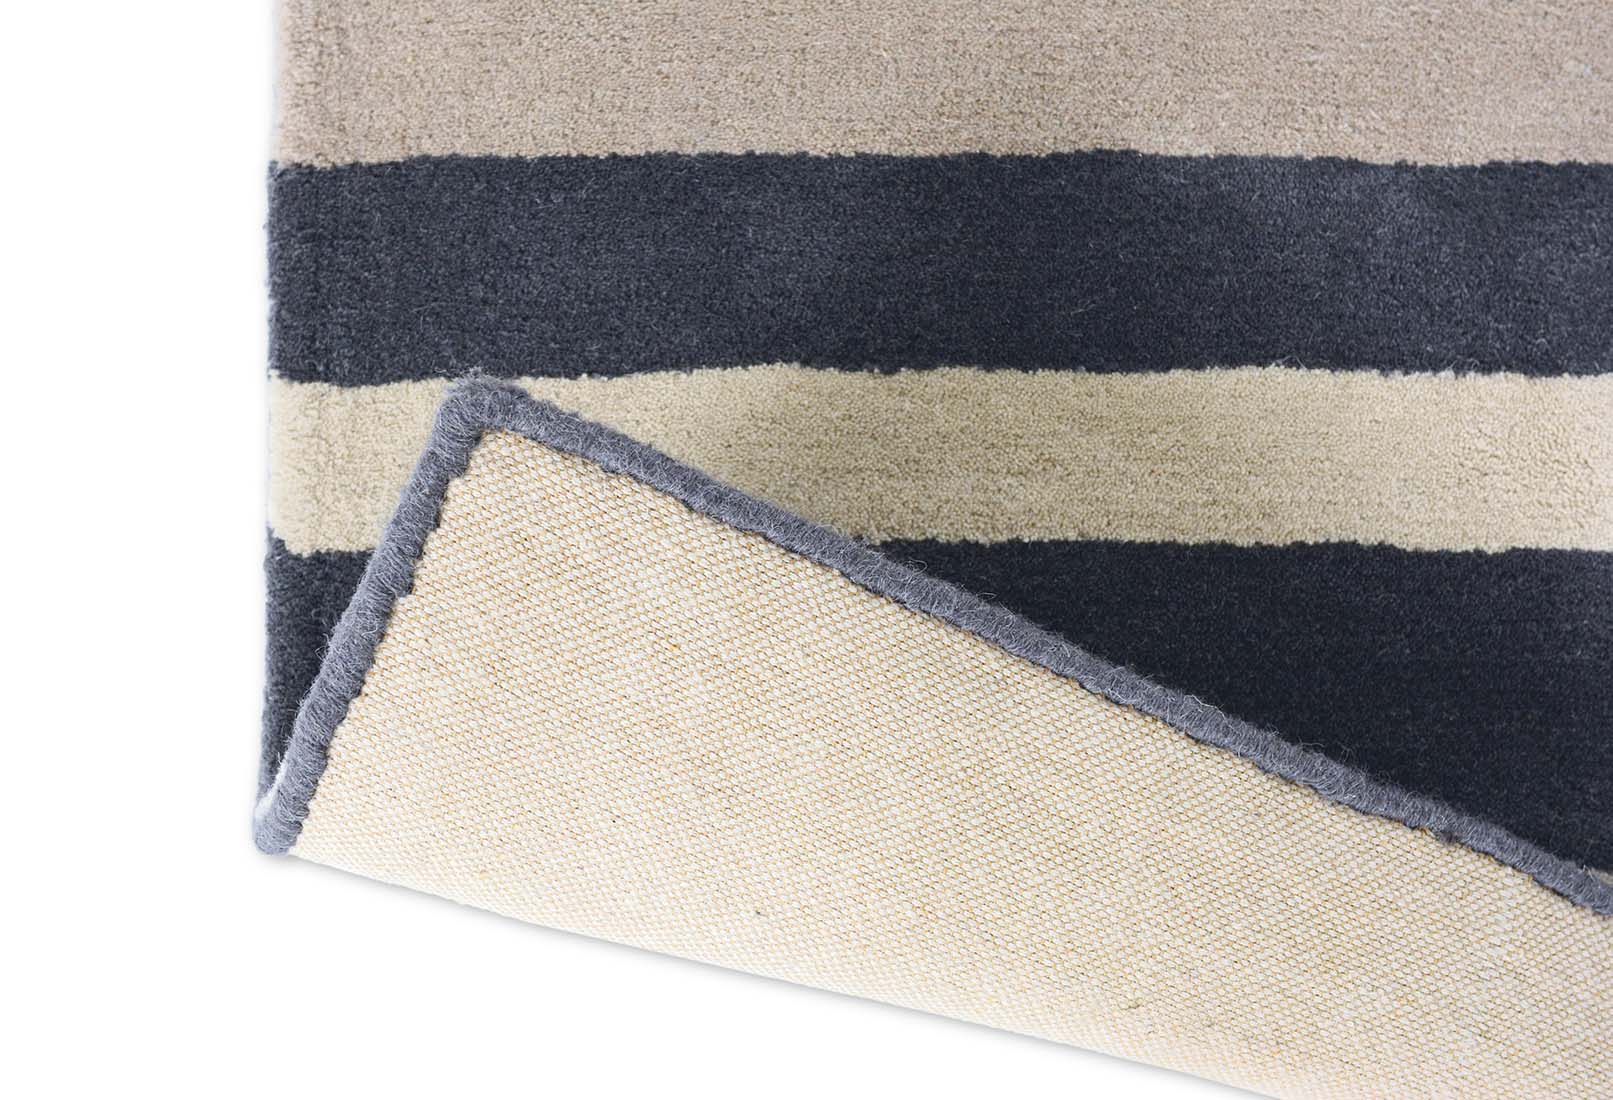 wool rug with blue stripe design